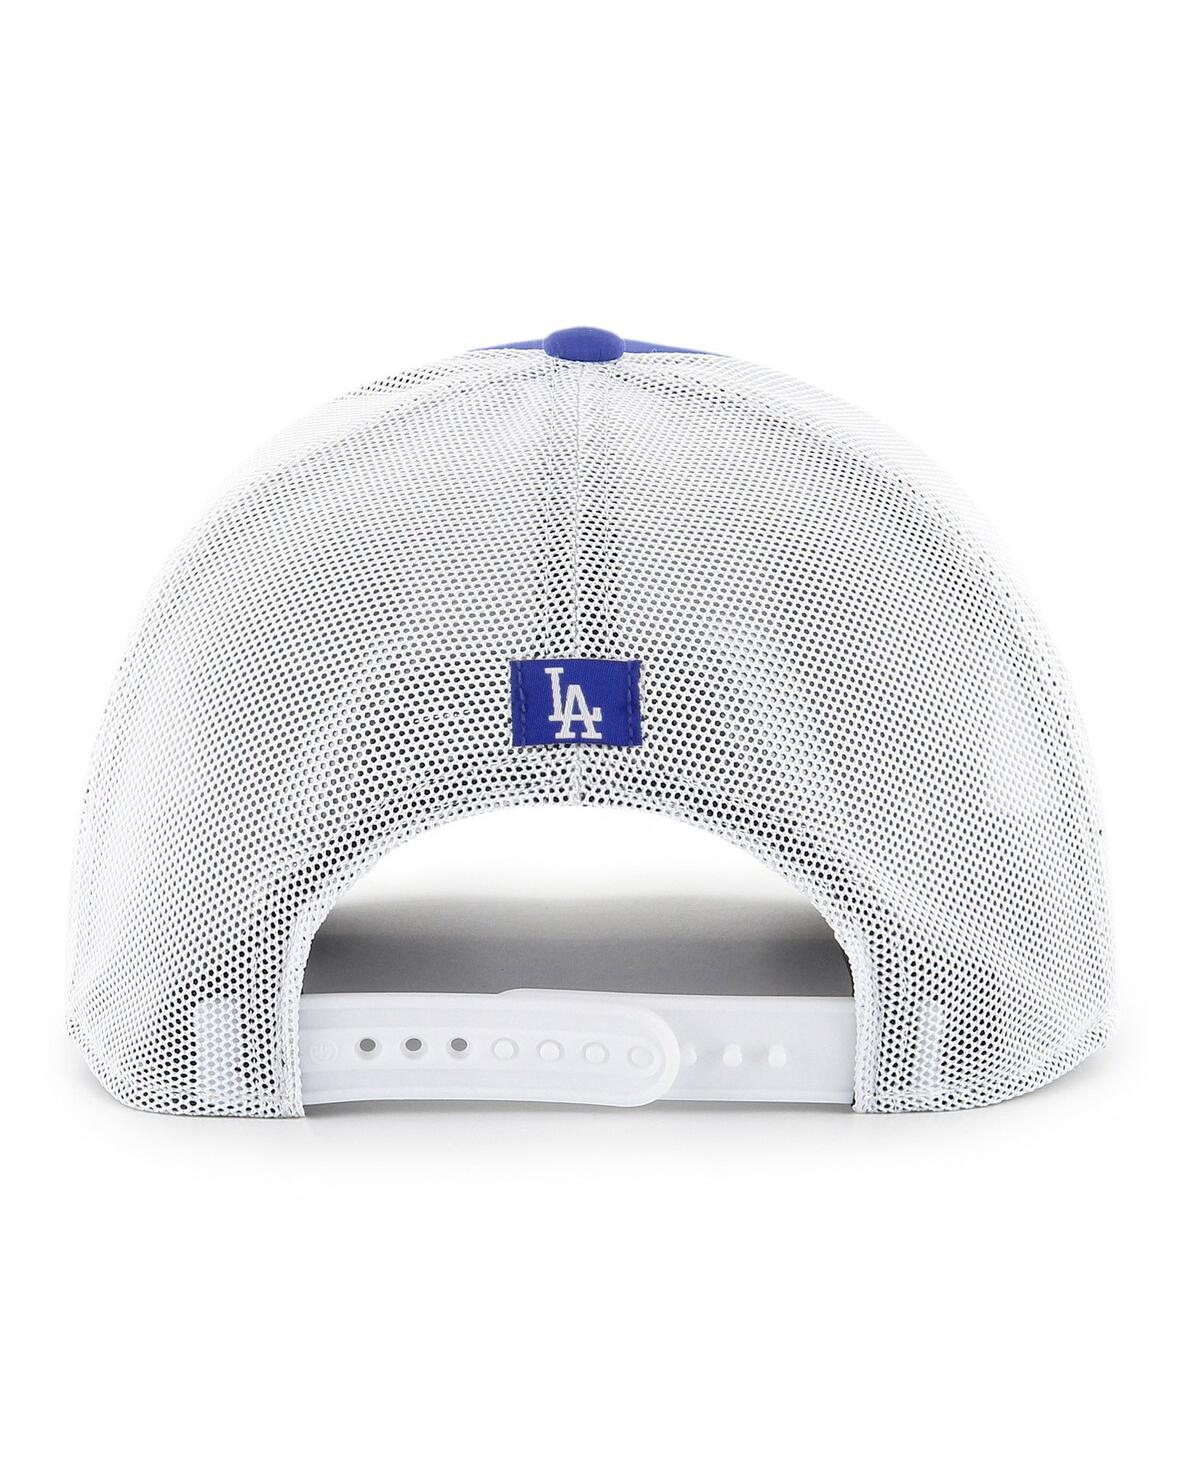 Shop 47 Brand Men's ' Royal, White Los Angeles Dodgers Spring Training Burgess Trucker Snapback Hat In Royal,white